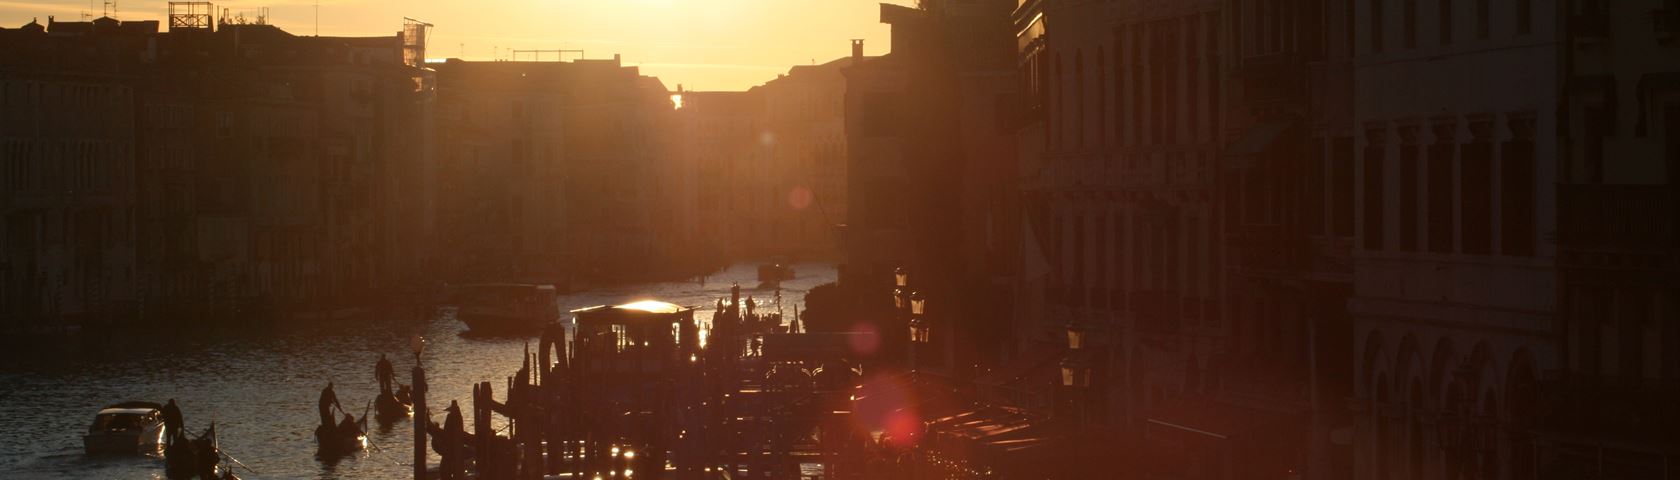 Sunset In Venice. How Romantic